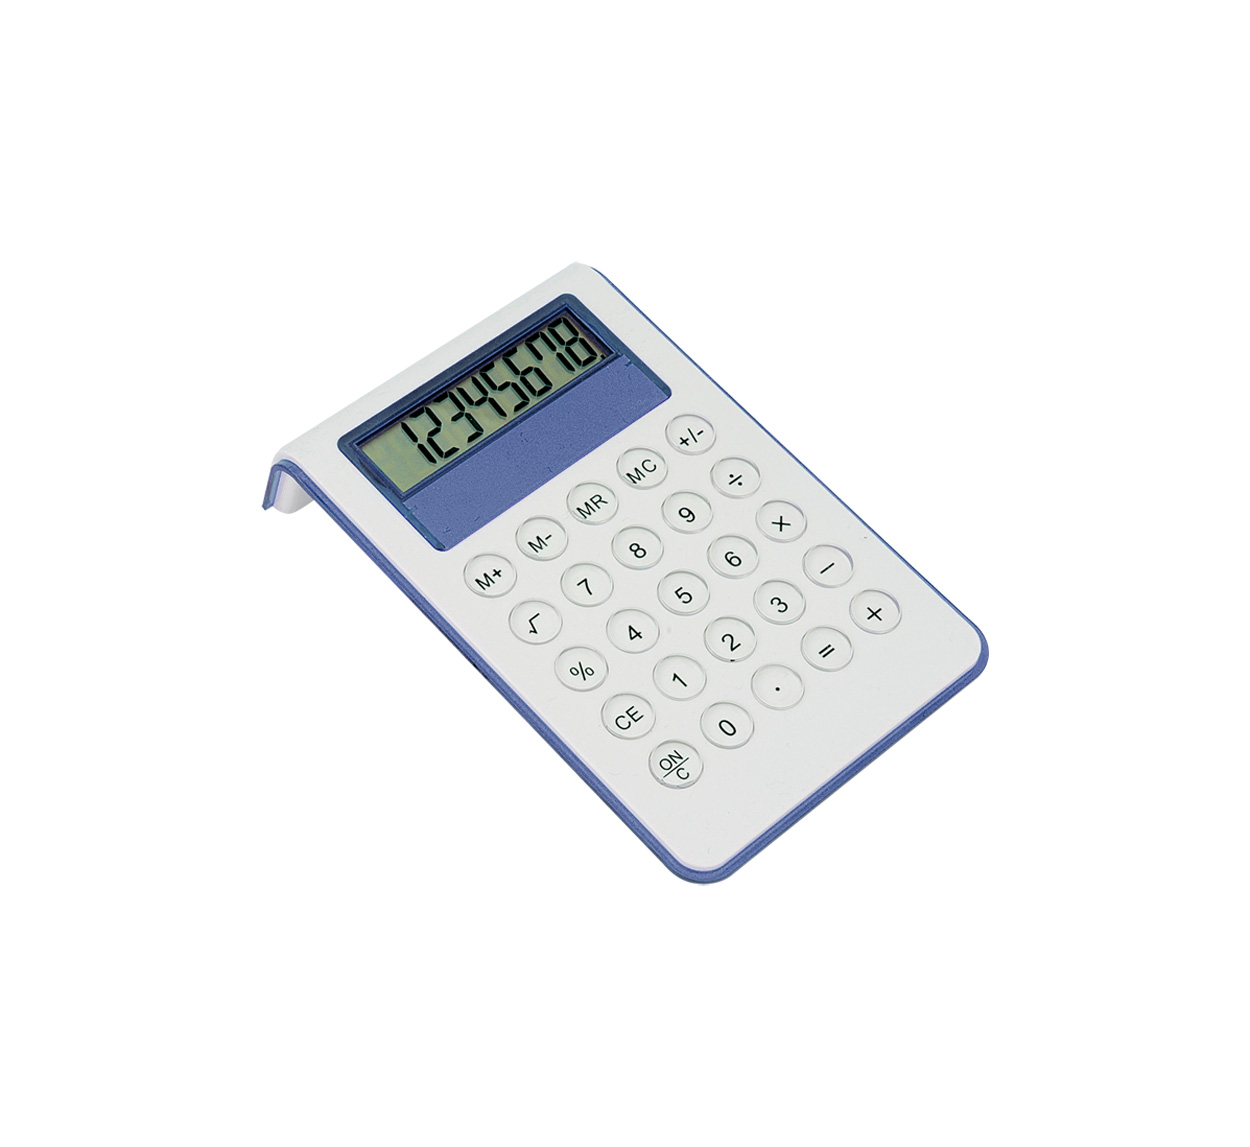 Promo  Myd kalkulator, plave boje